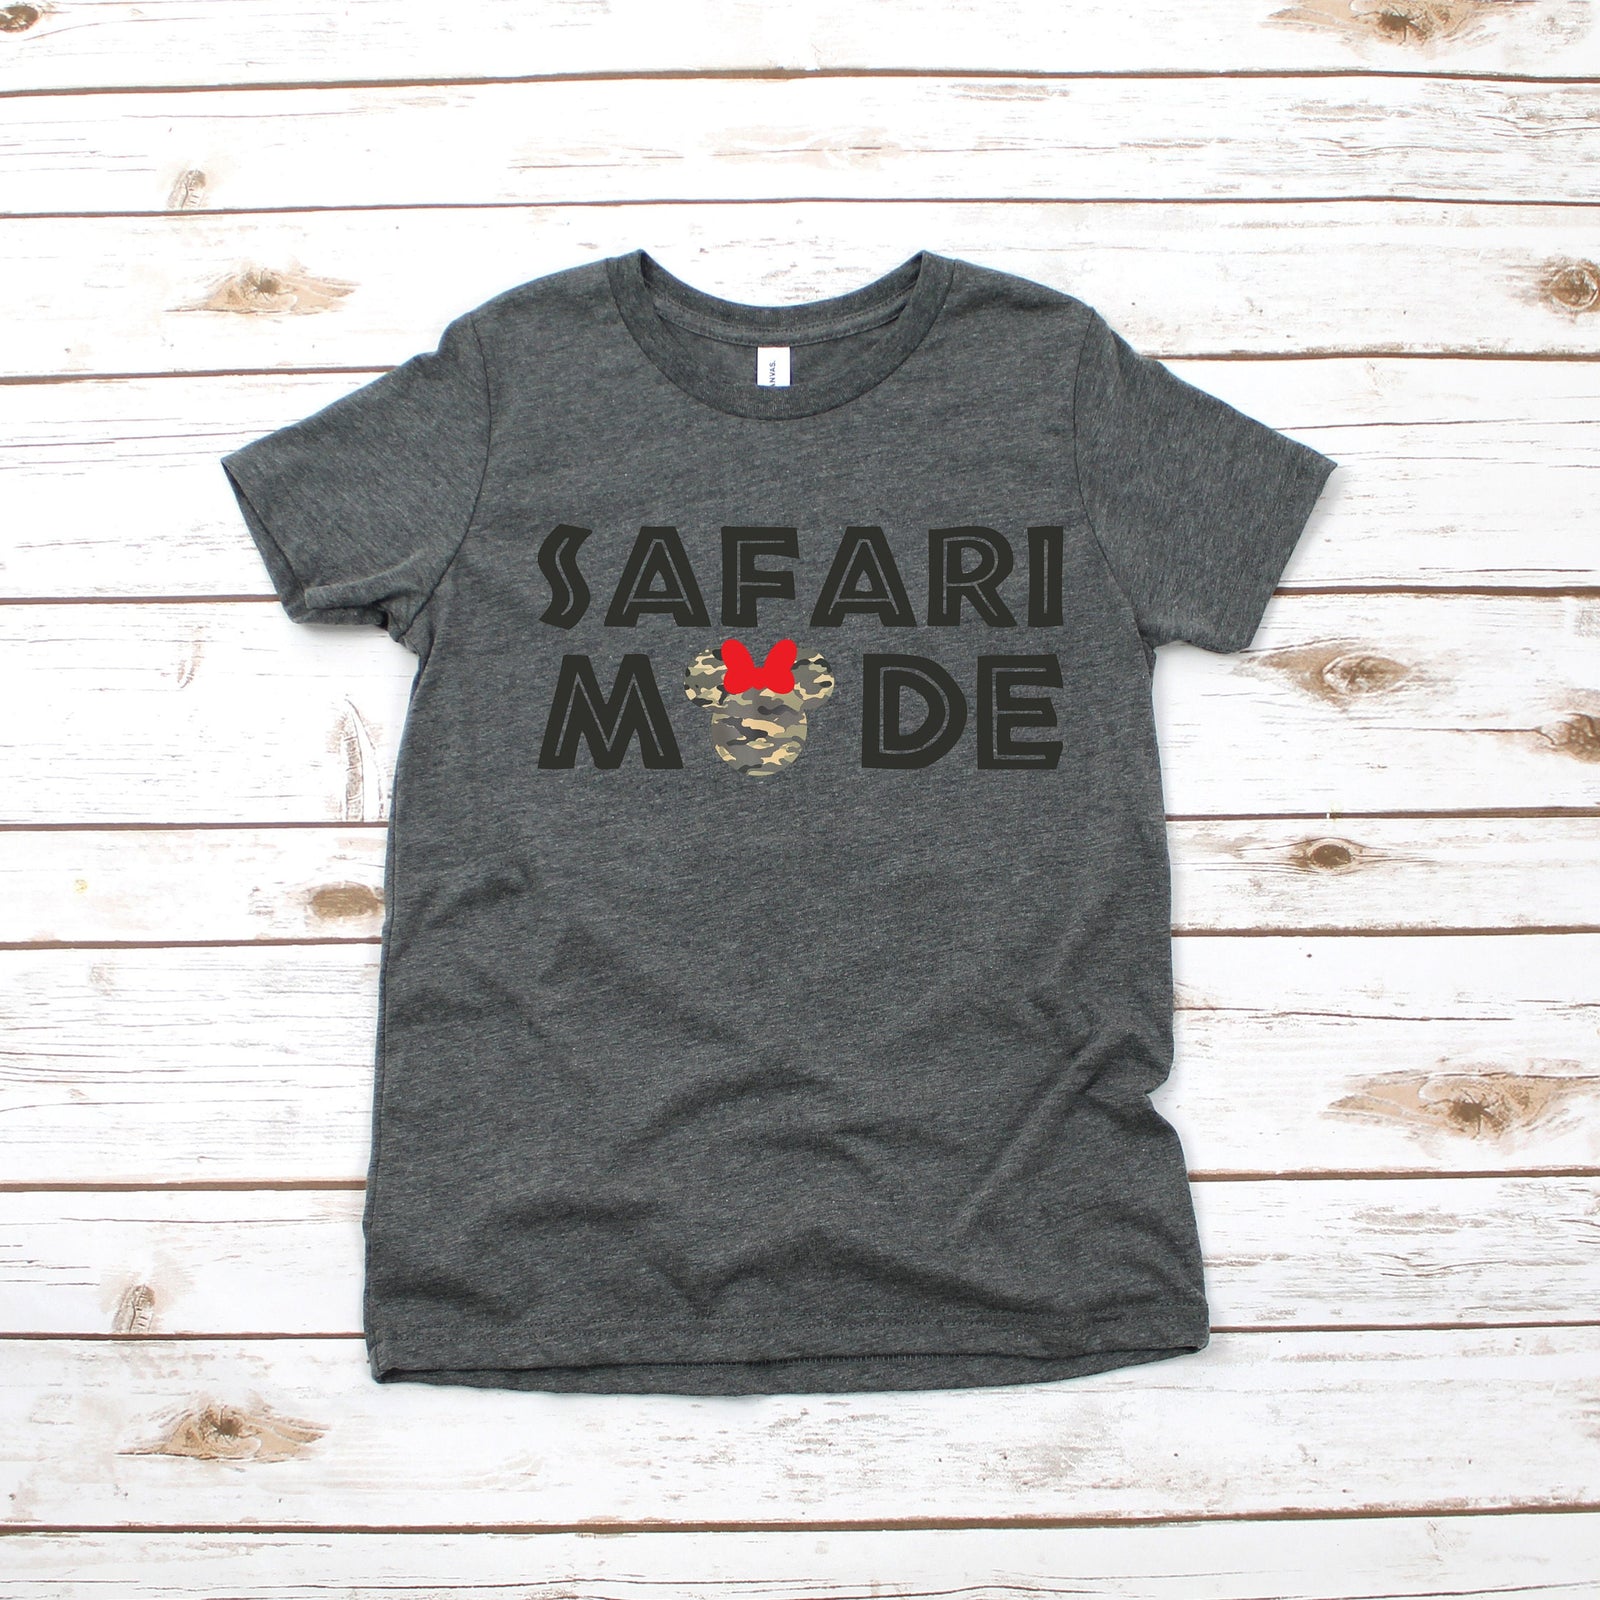 Safari Mode Minnie Mouse Youth T Shirt - Disney Kids Animal Kingdom - Camouflaged Minnie